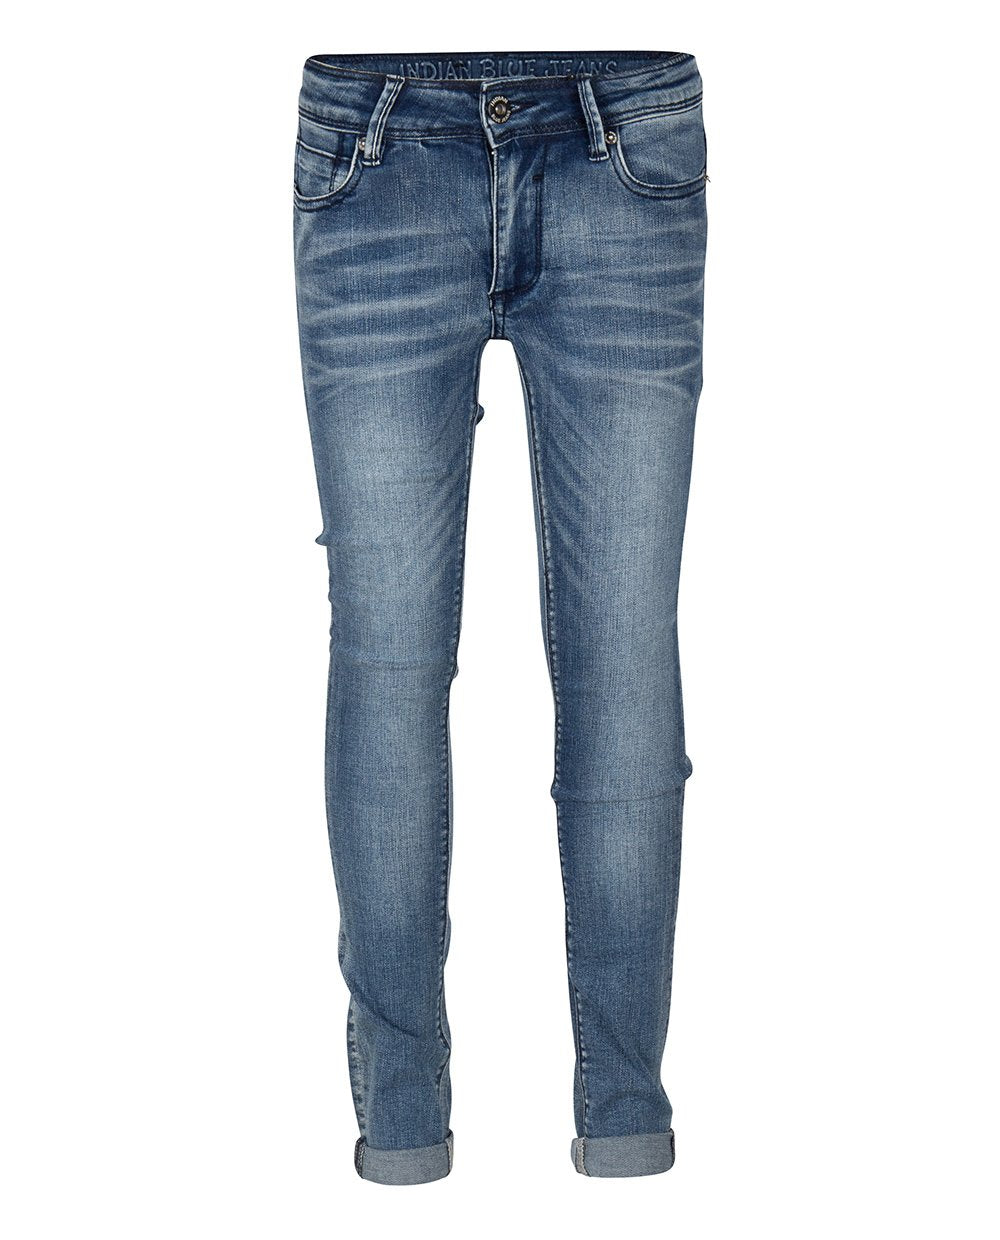 Jongens BLUE BRAD SUPER SKINNY FIT van Indian Blue Jeans in de kleur Used Medium Denim in maat 176.